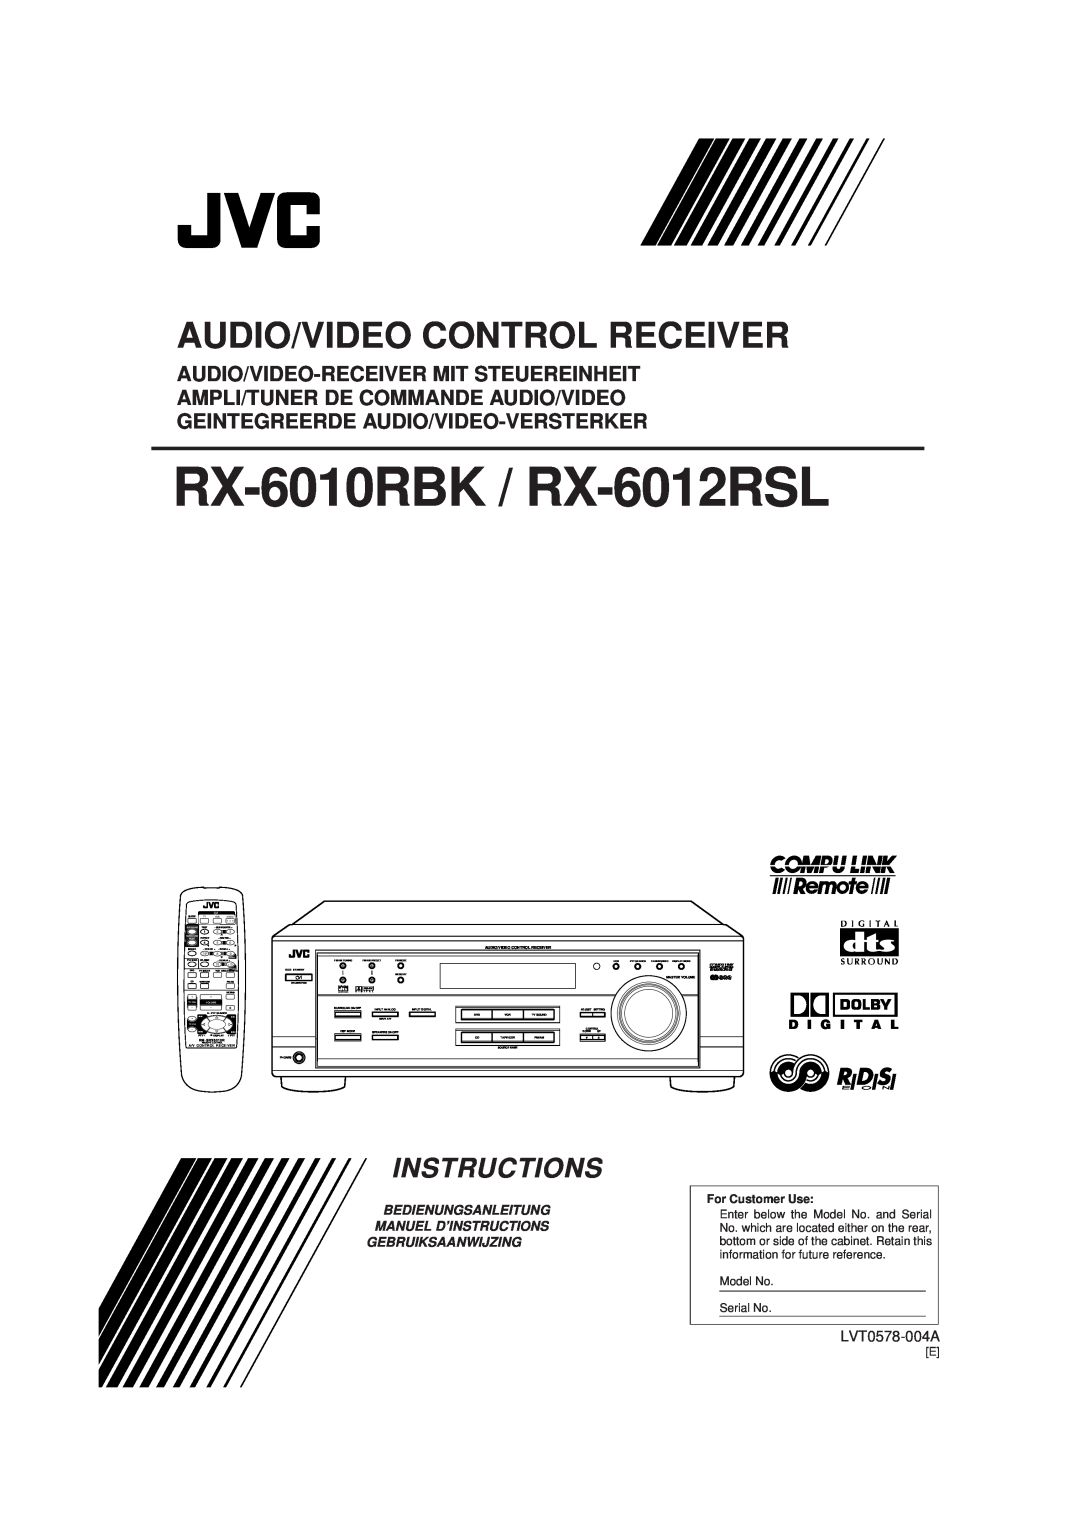 JVC manual RX-6010RBK / RX-6012RSL, Audio/Video Control Receiver, Instructions, Audio/Video-Receivermit Steuereinheit 